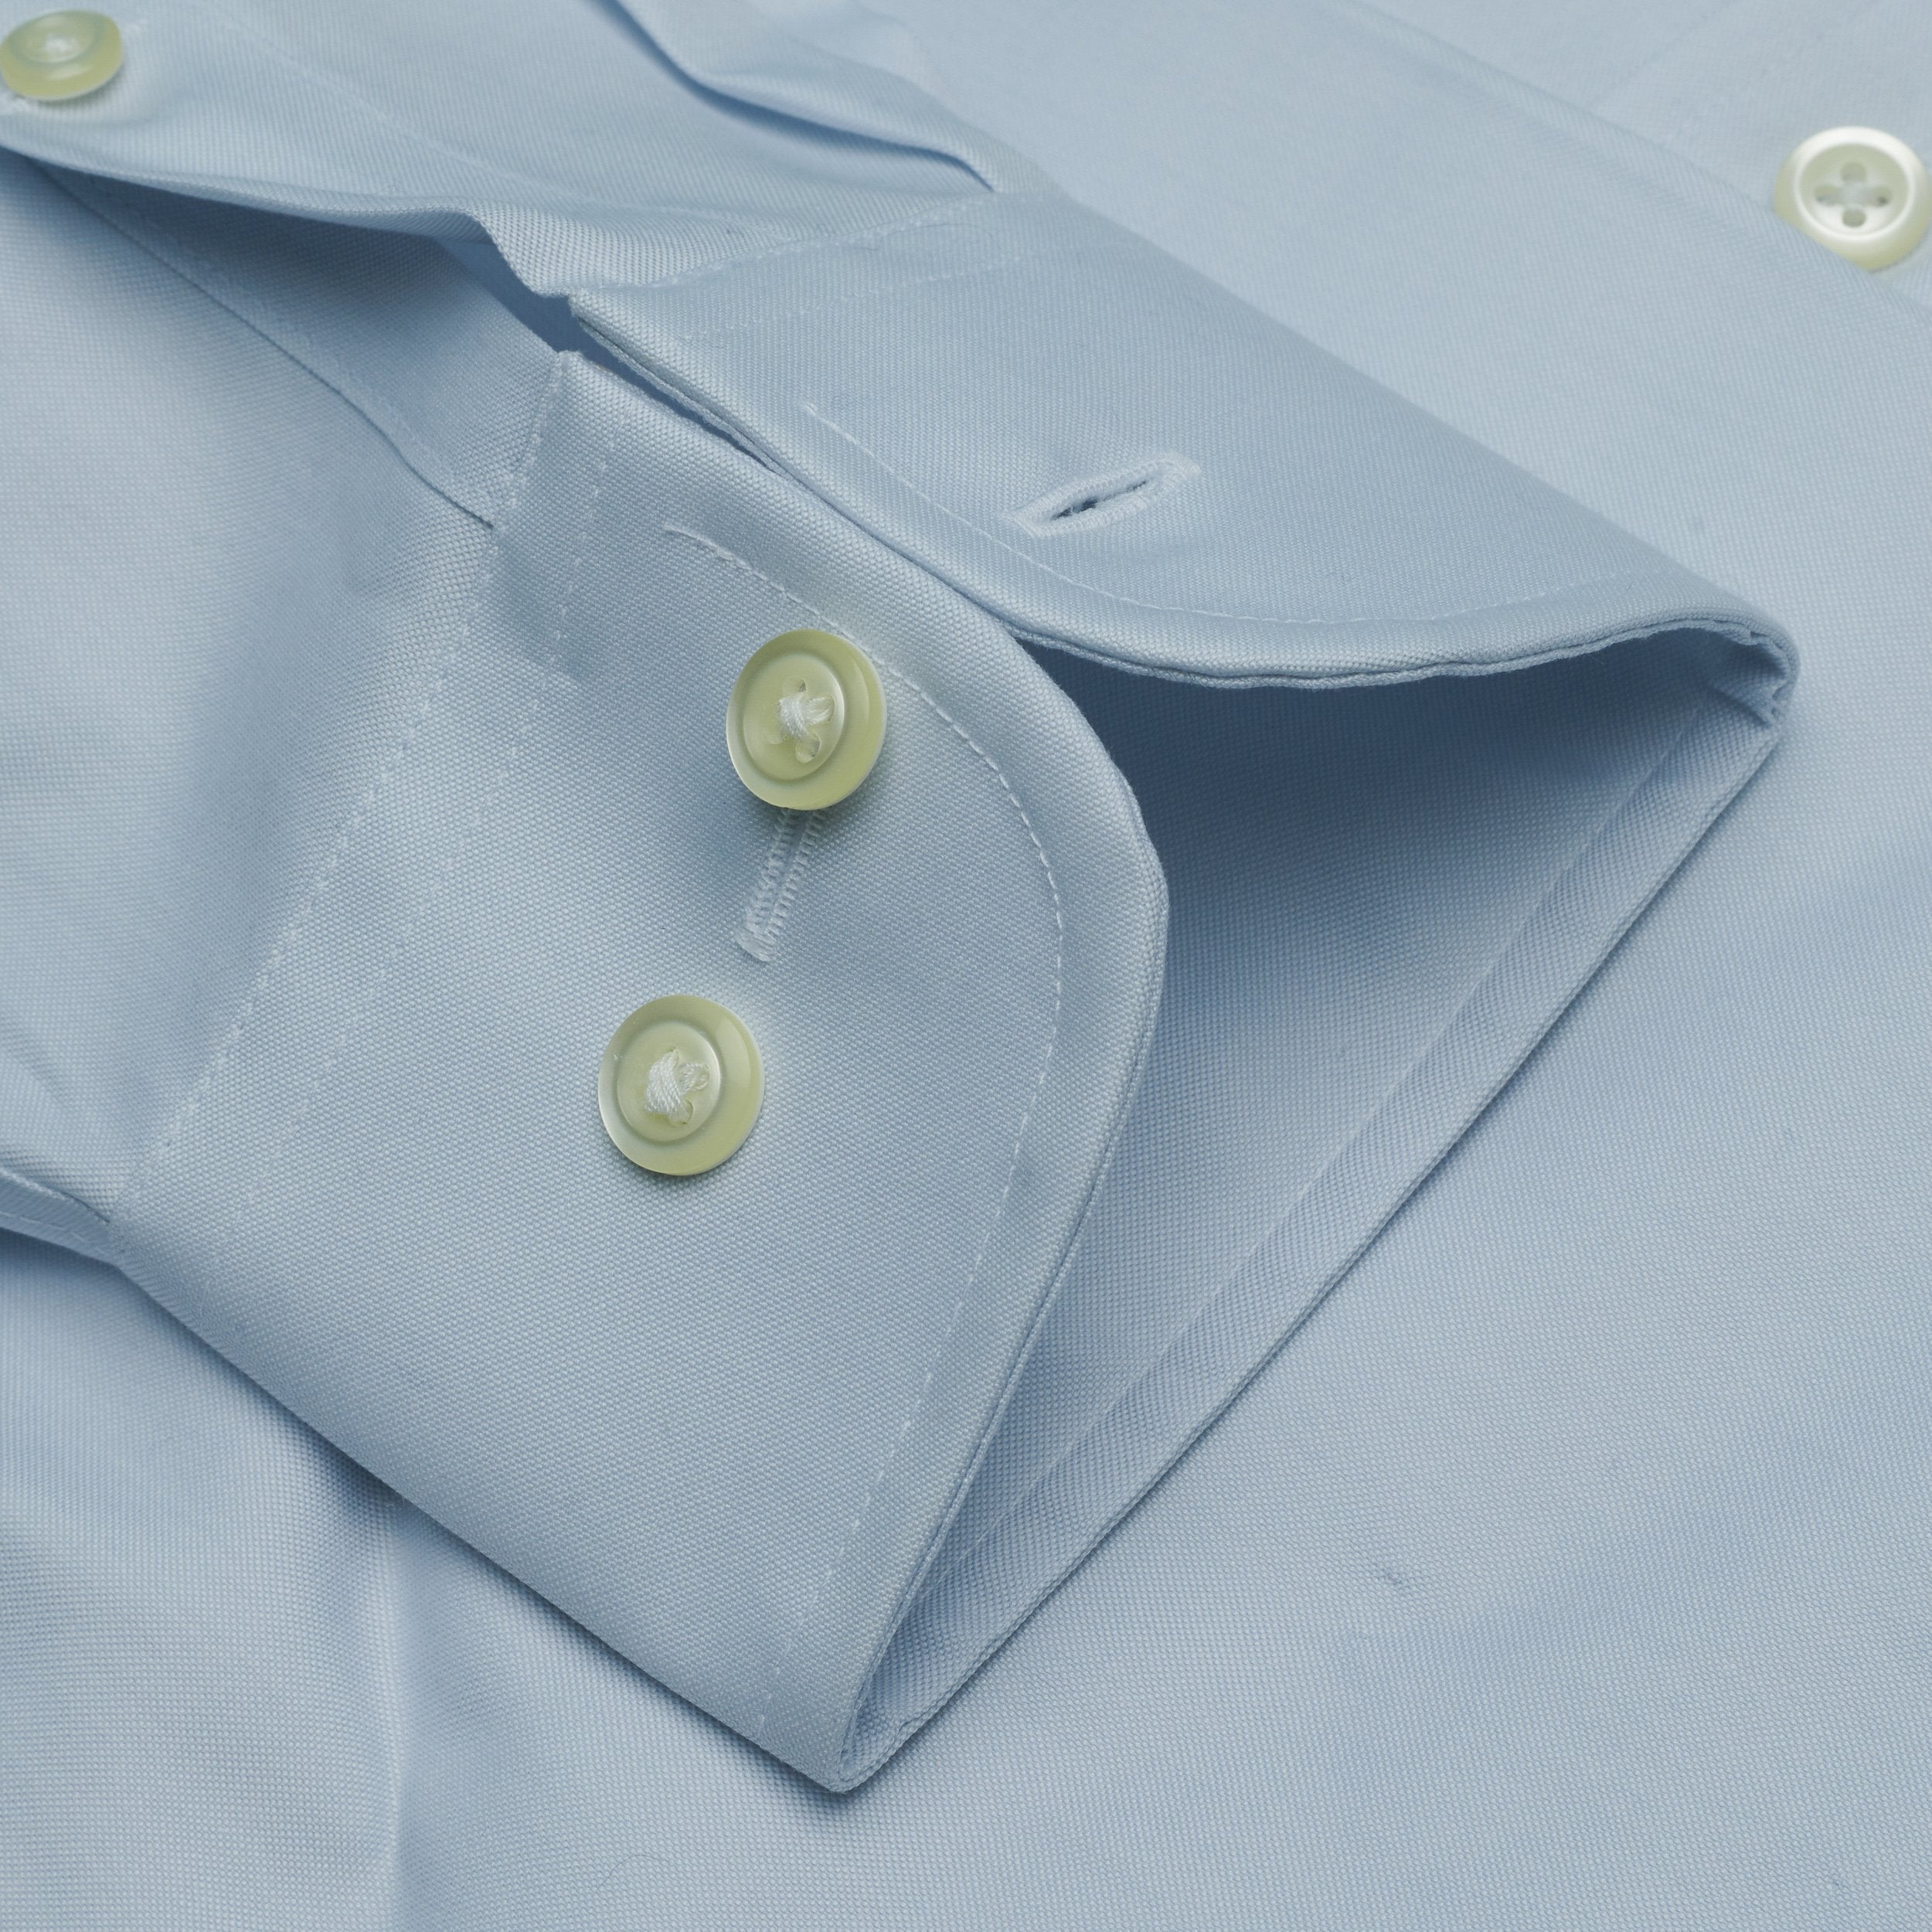 039-Grey Spread Collar Tailor Fit Best Dress Shirt 